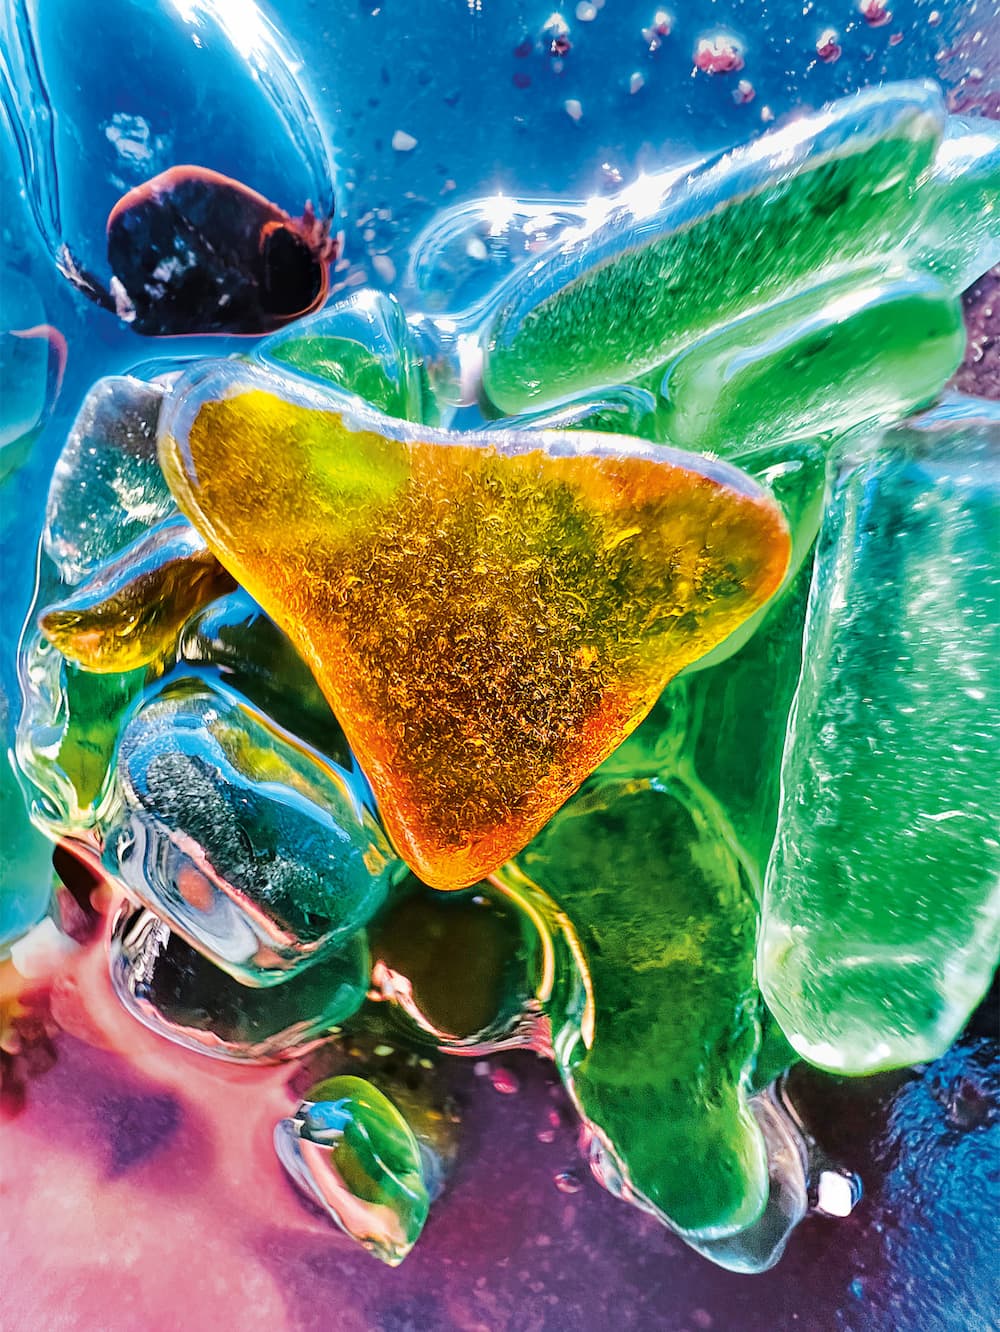 Guido Cassanelli (@laion.ph) 的作品〈Sea Glass〉(海玻璃)。以 iPhone 13 Pro Max 拍攝。